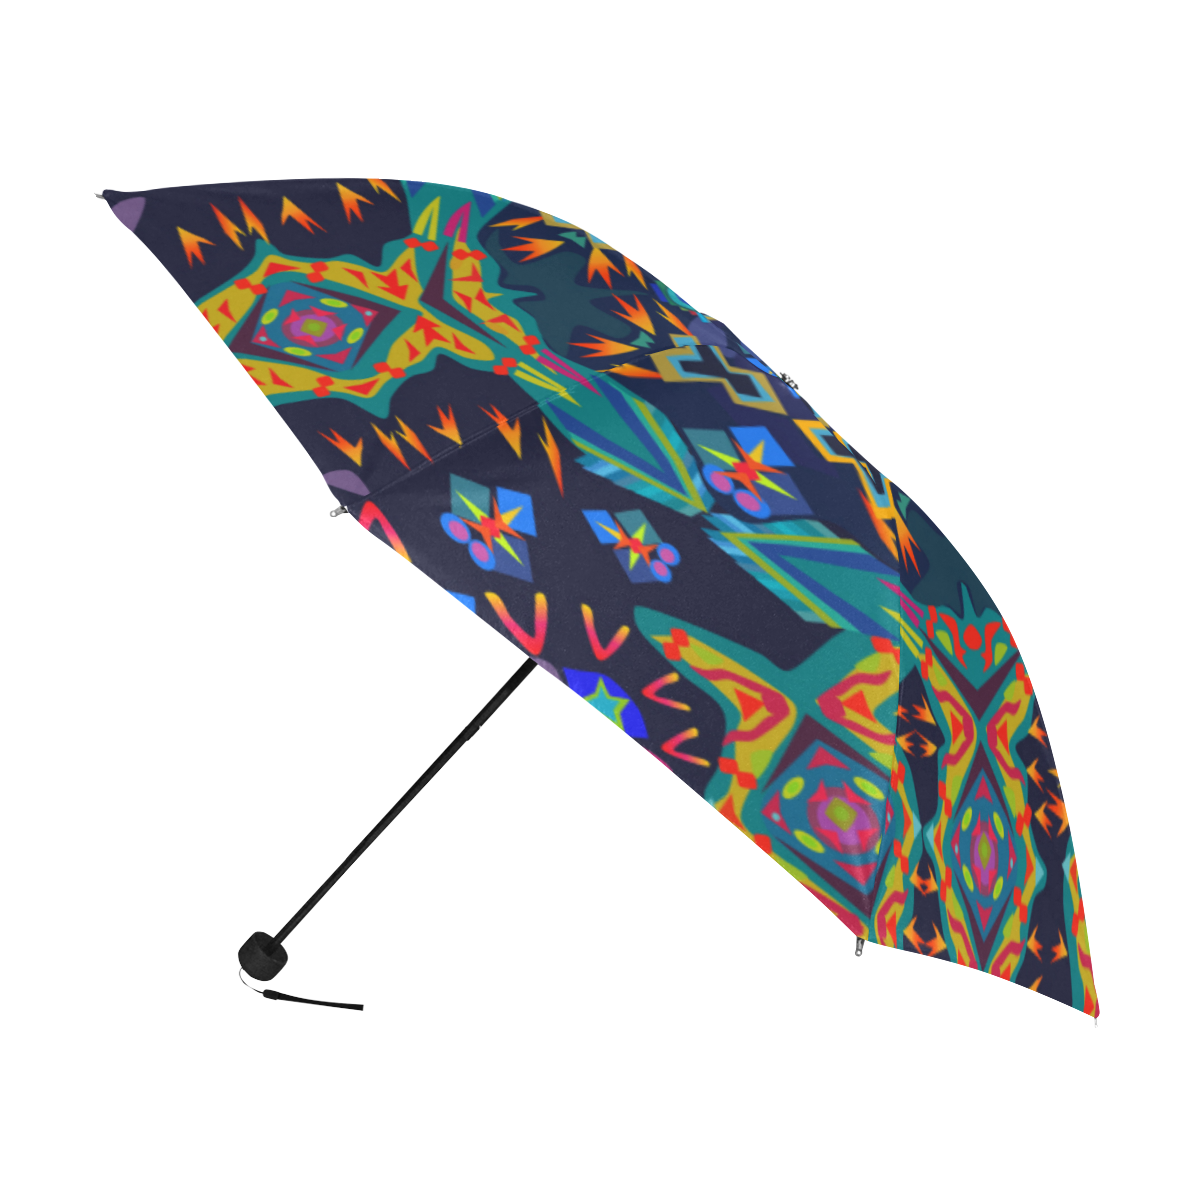 Latesstest design june 2020 Anti-UV Foldable Umbrella (U08)